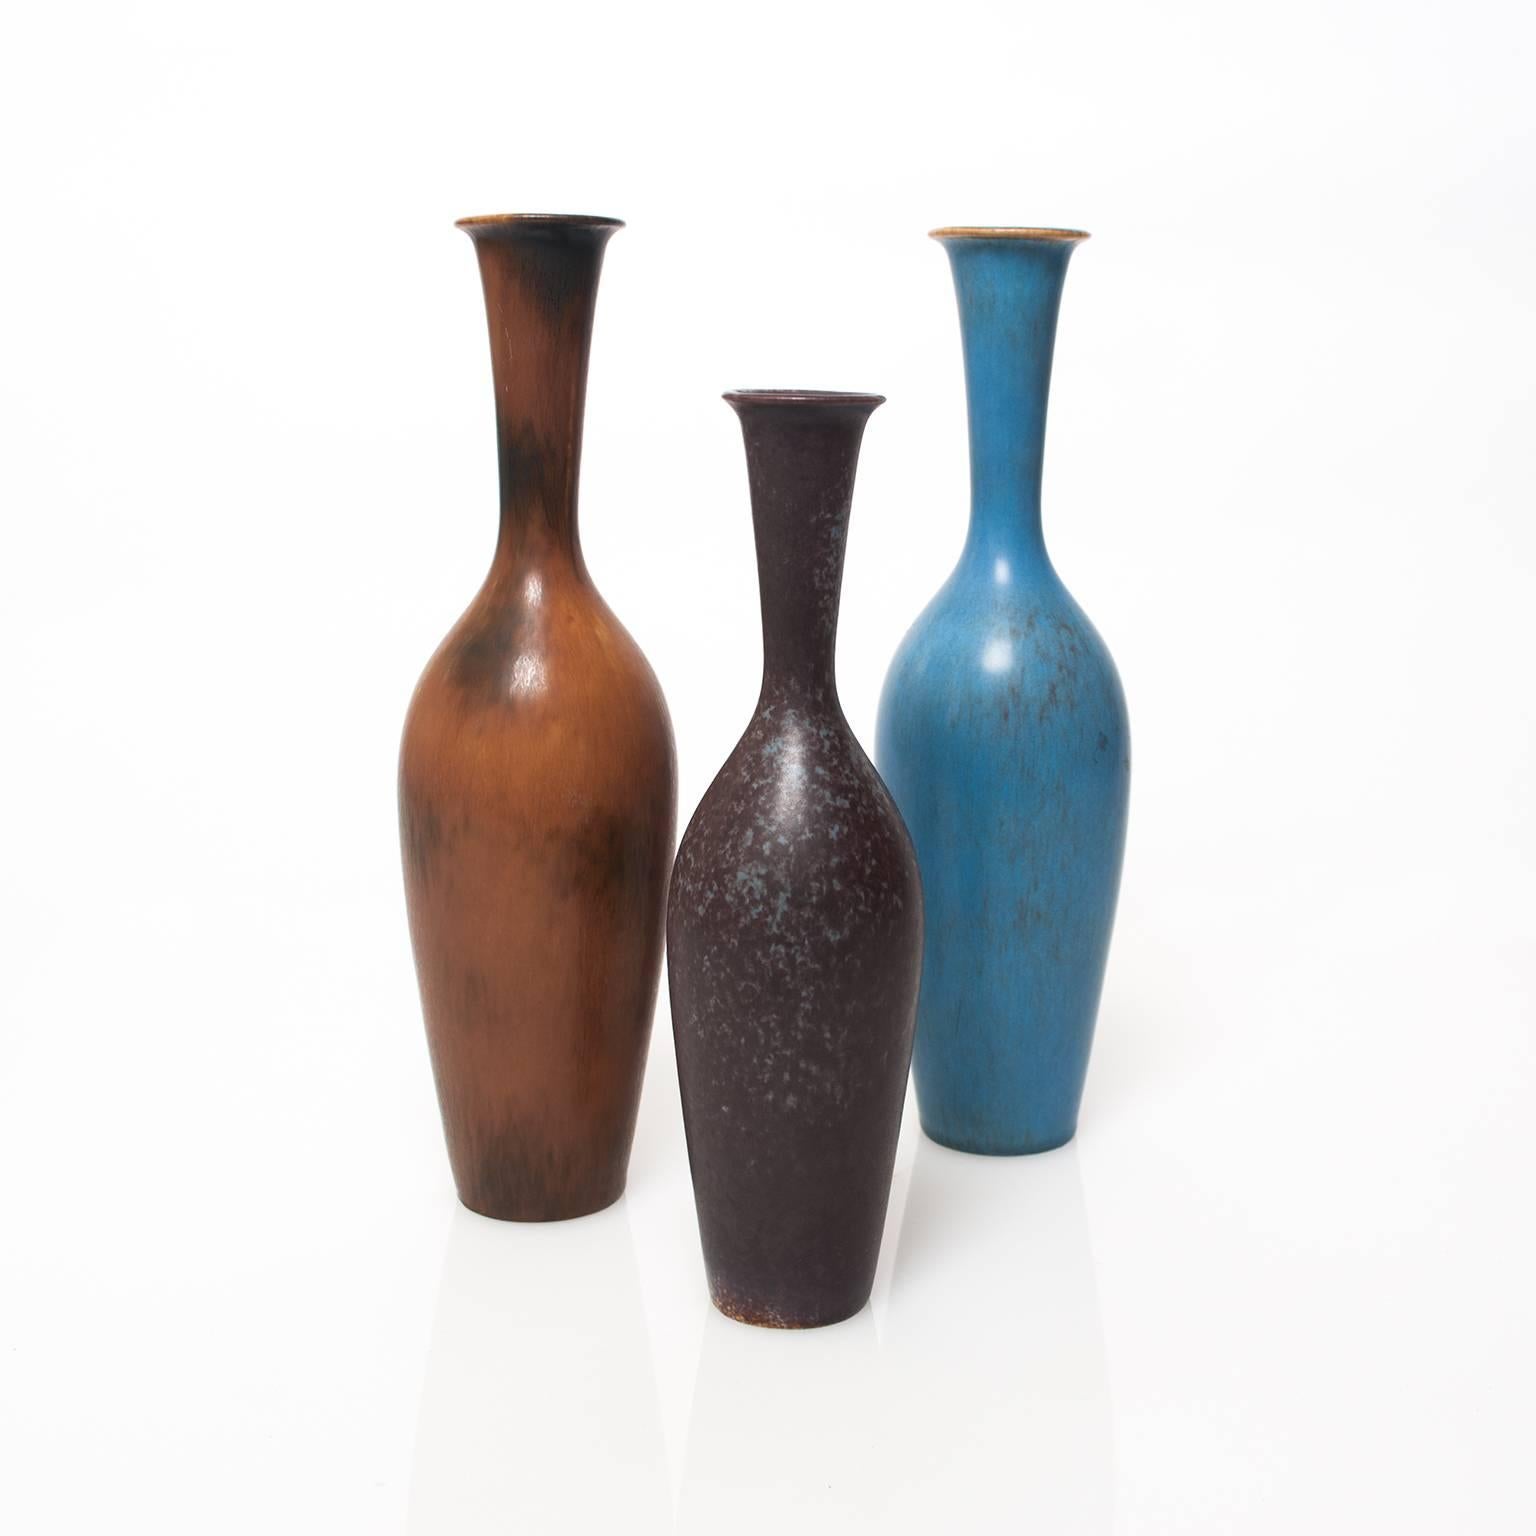 Group of 3 elegant Scandinavian Modern ceramic vase in blue, plum and amber glazes by Gunnar Nylund for Rorstrand, Sweden circa 1950
Height: 11.25